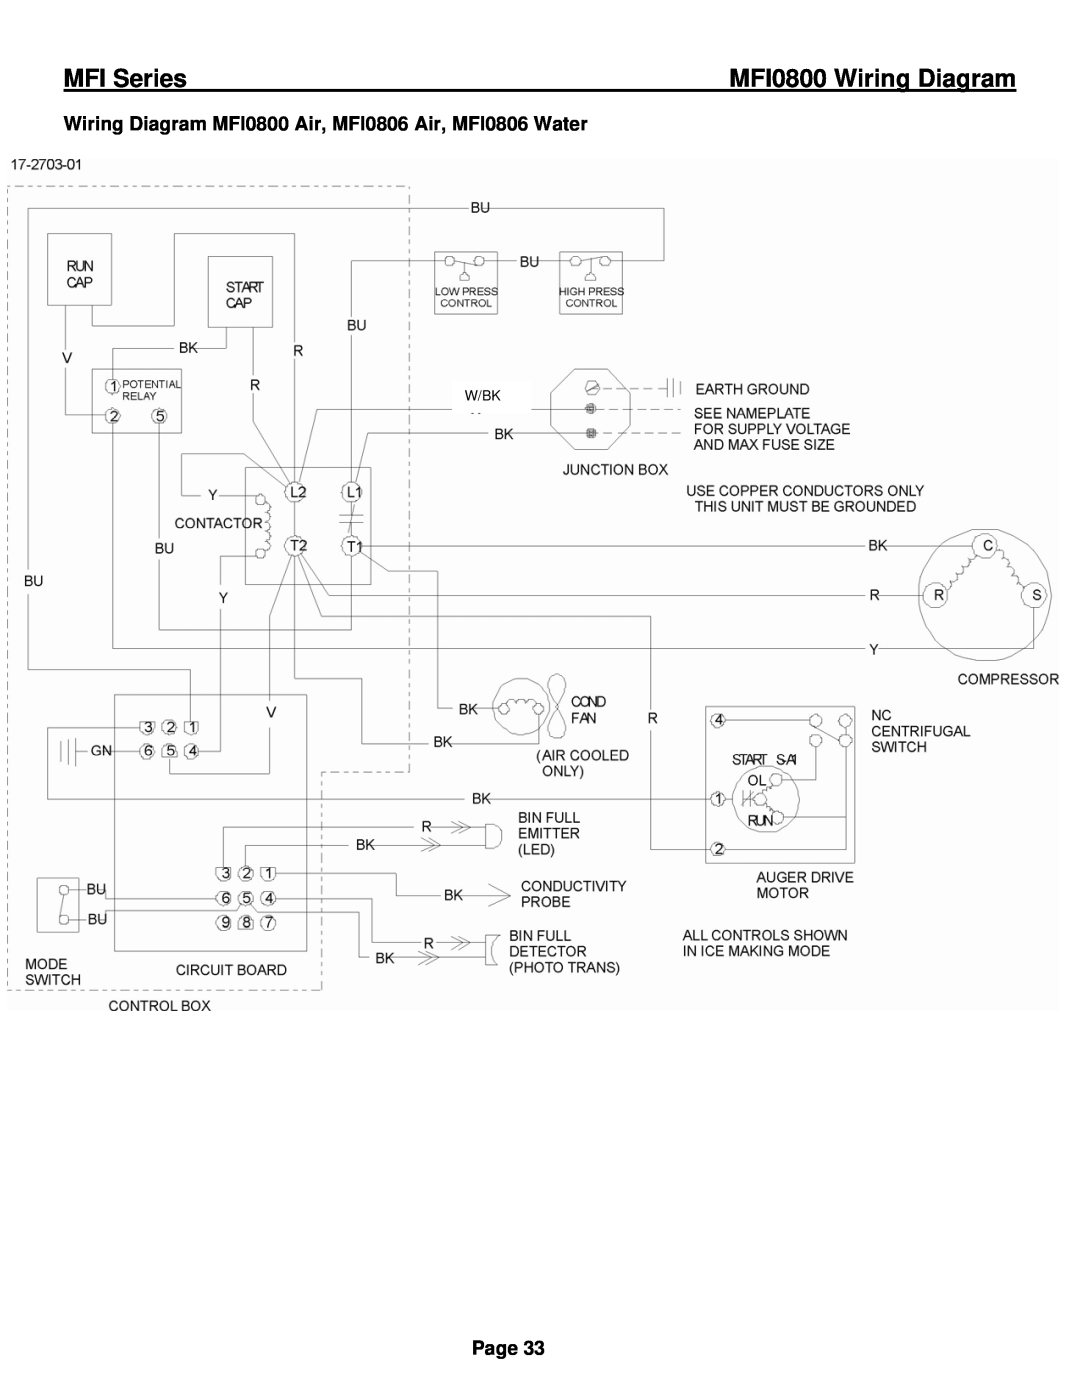 Ice-O-Matic installation manual MFI0800 Wiring Diagram, MFI Series, Page 